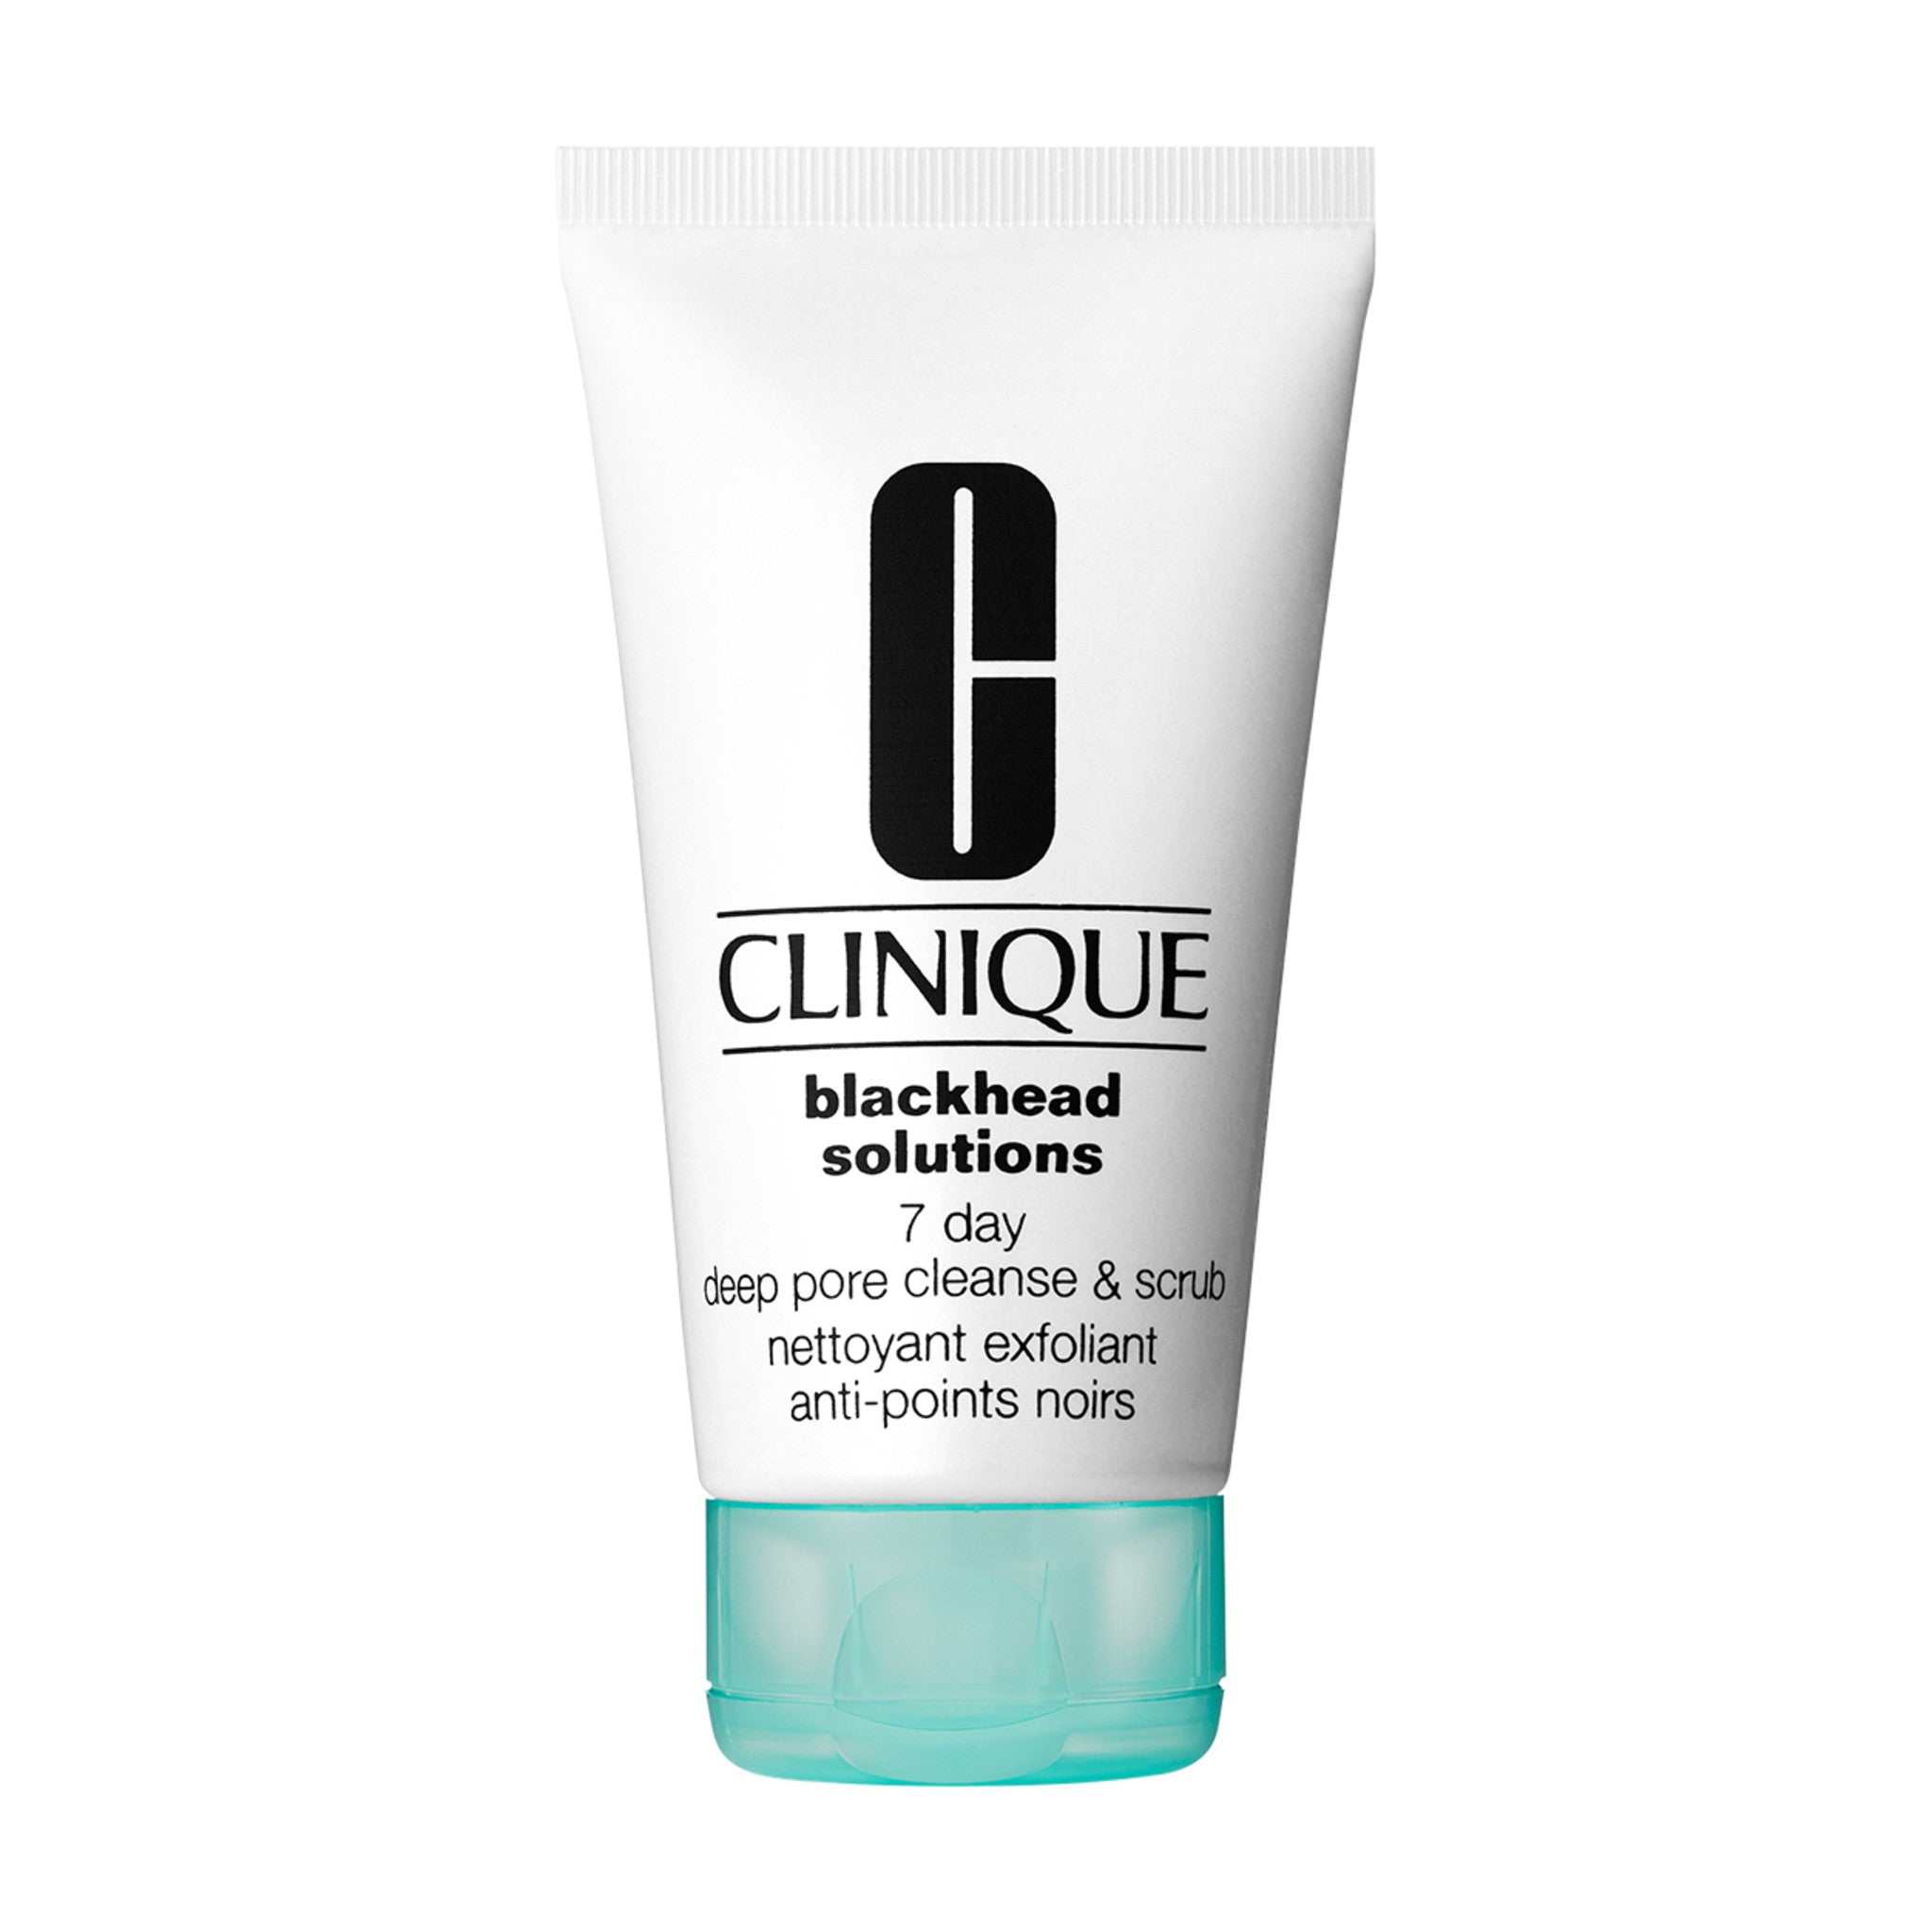 Clinique Blackhead Solutions 7 Day Deep Pore Cleanse and Scrub